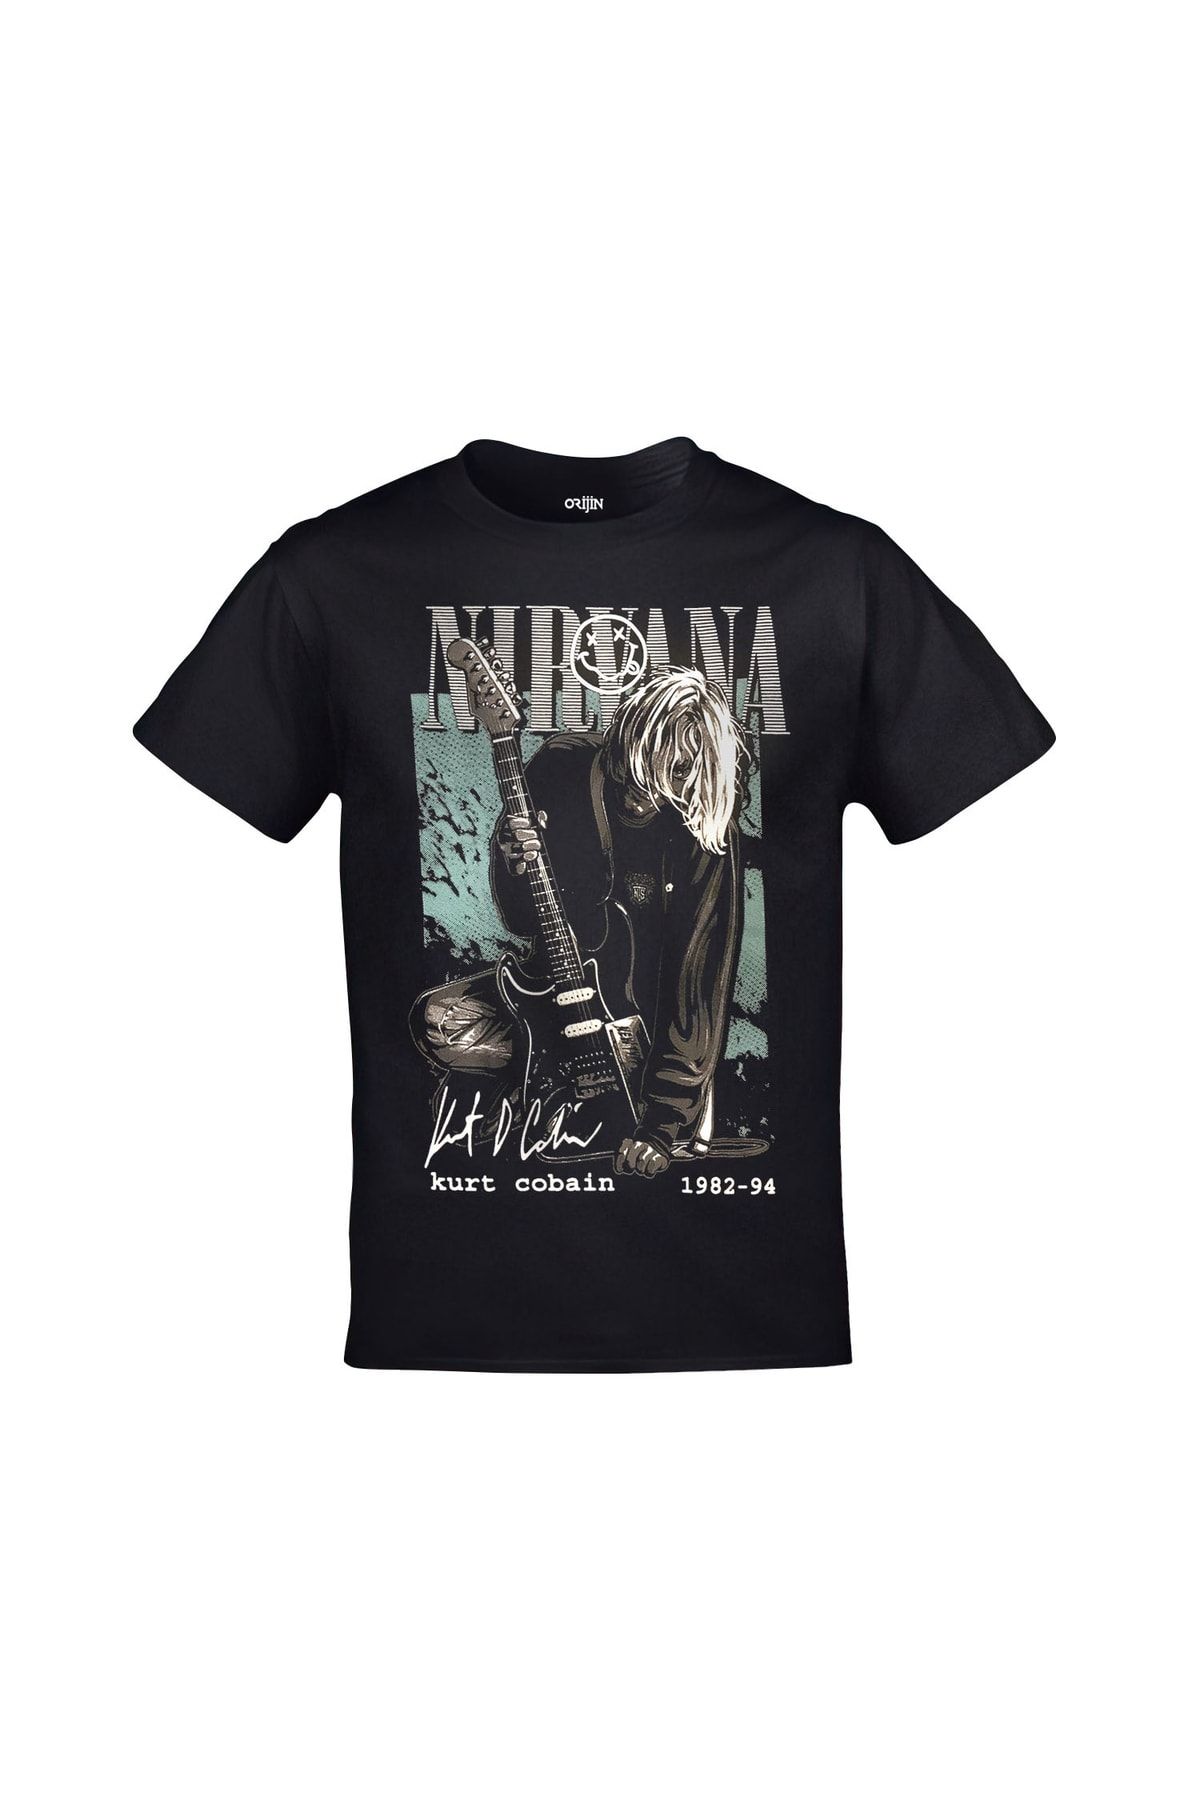 Orijin Tekstil Nirvana Kurt Cobain 1982-94 Baskılı Unisex Siyah Tshirt